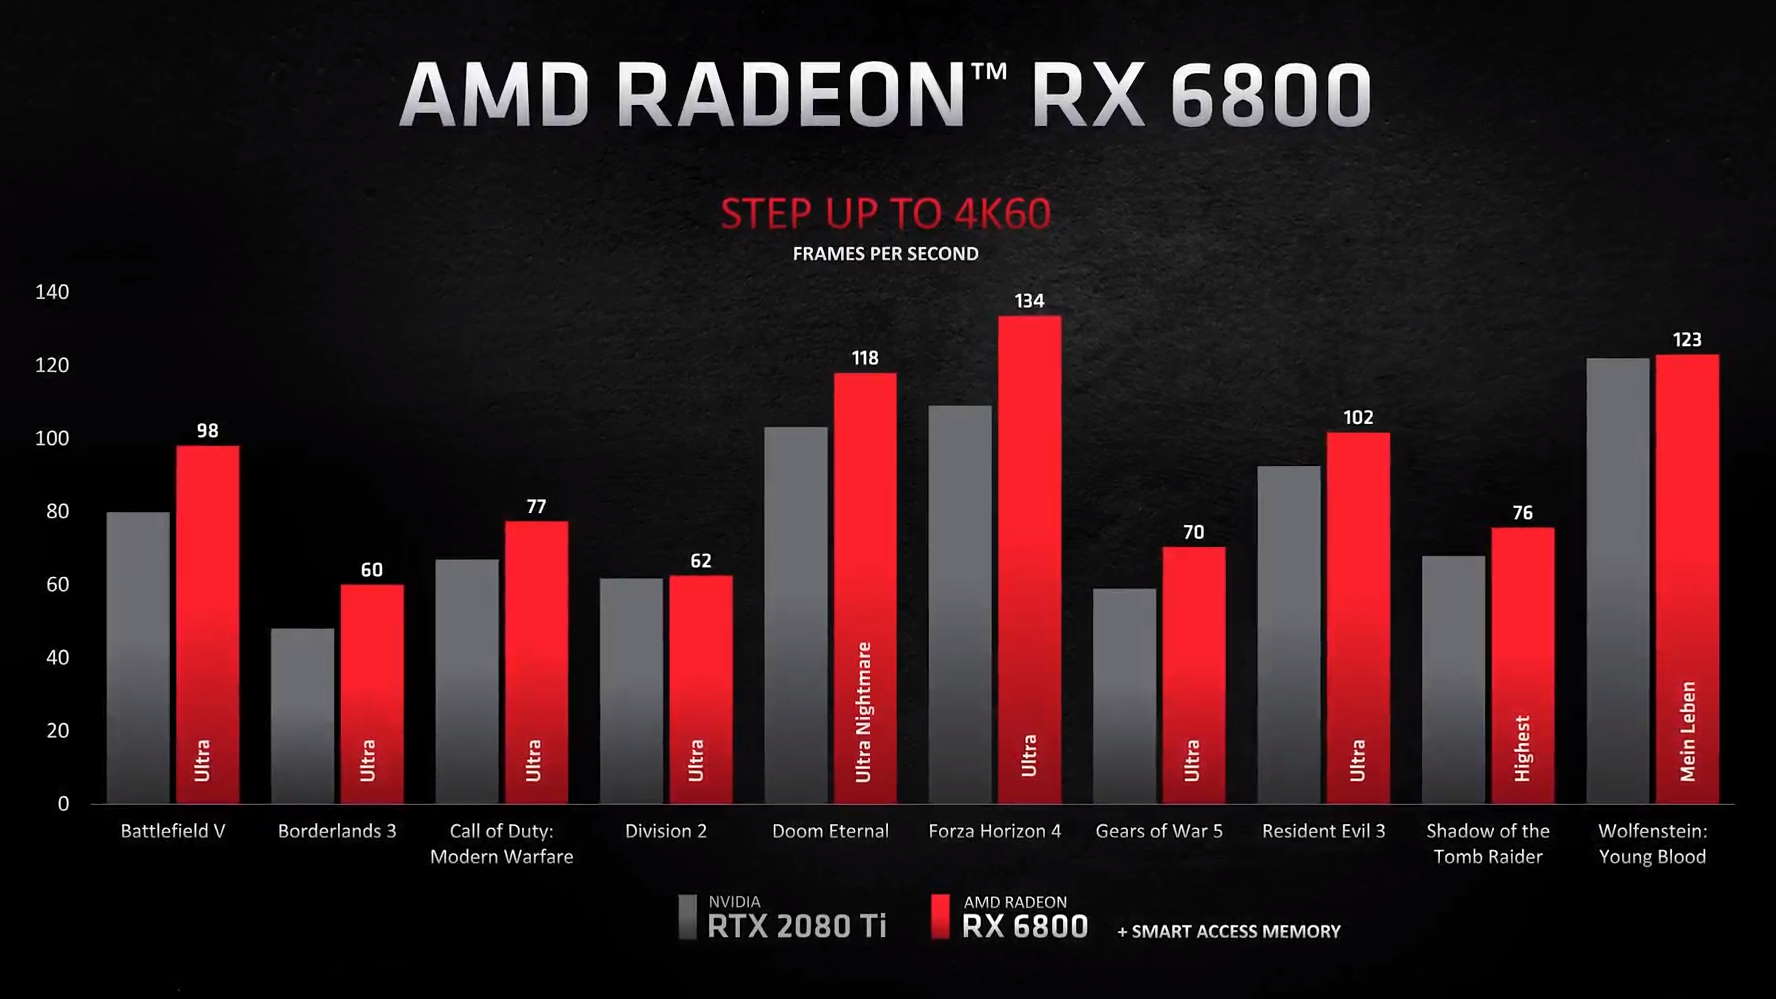 AMD RX 6800 performance